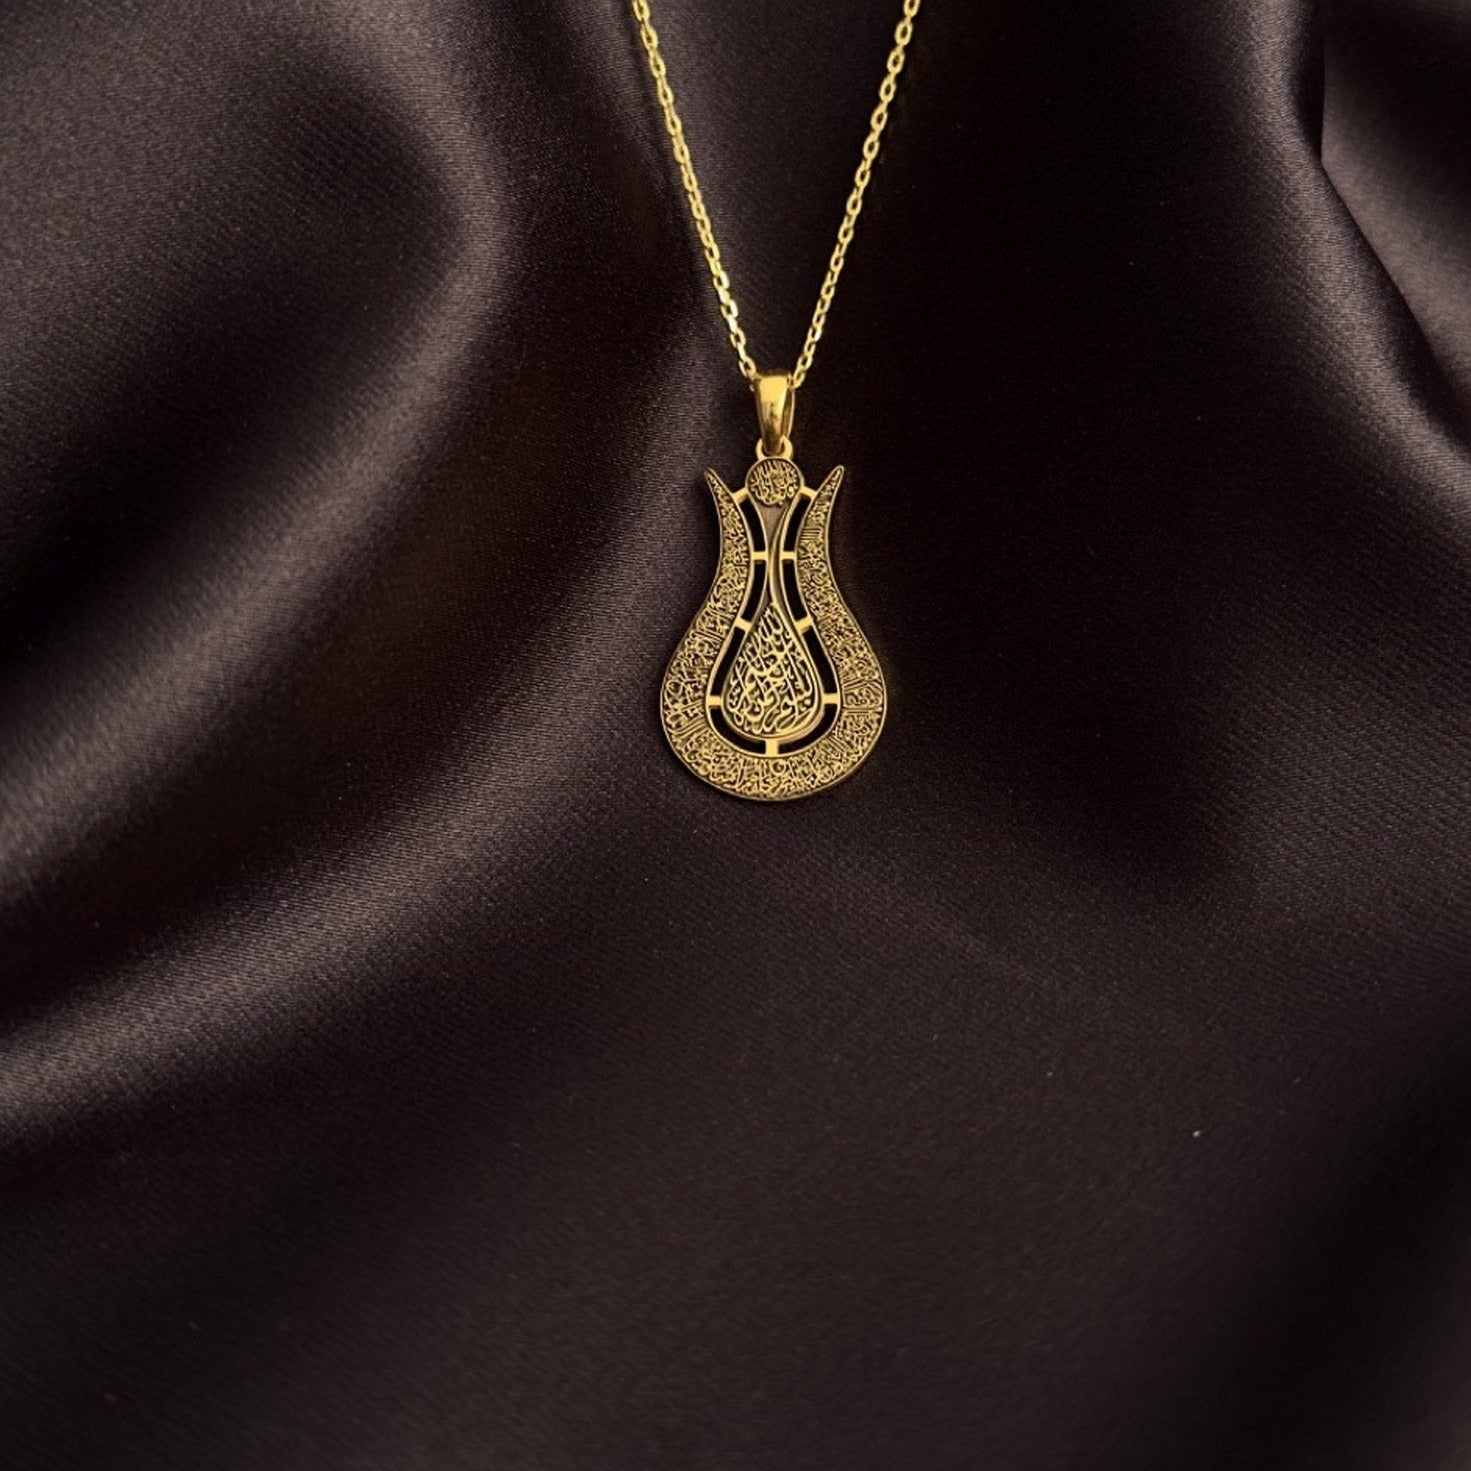 islamic-jewelry-ayatul-kursi-tulip-islamic-necklace-18k-gold-pendant-on-925-silver-meaningful-islamic-scripture-elegant-style-shukranislamicart